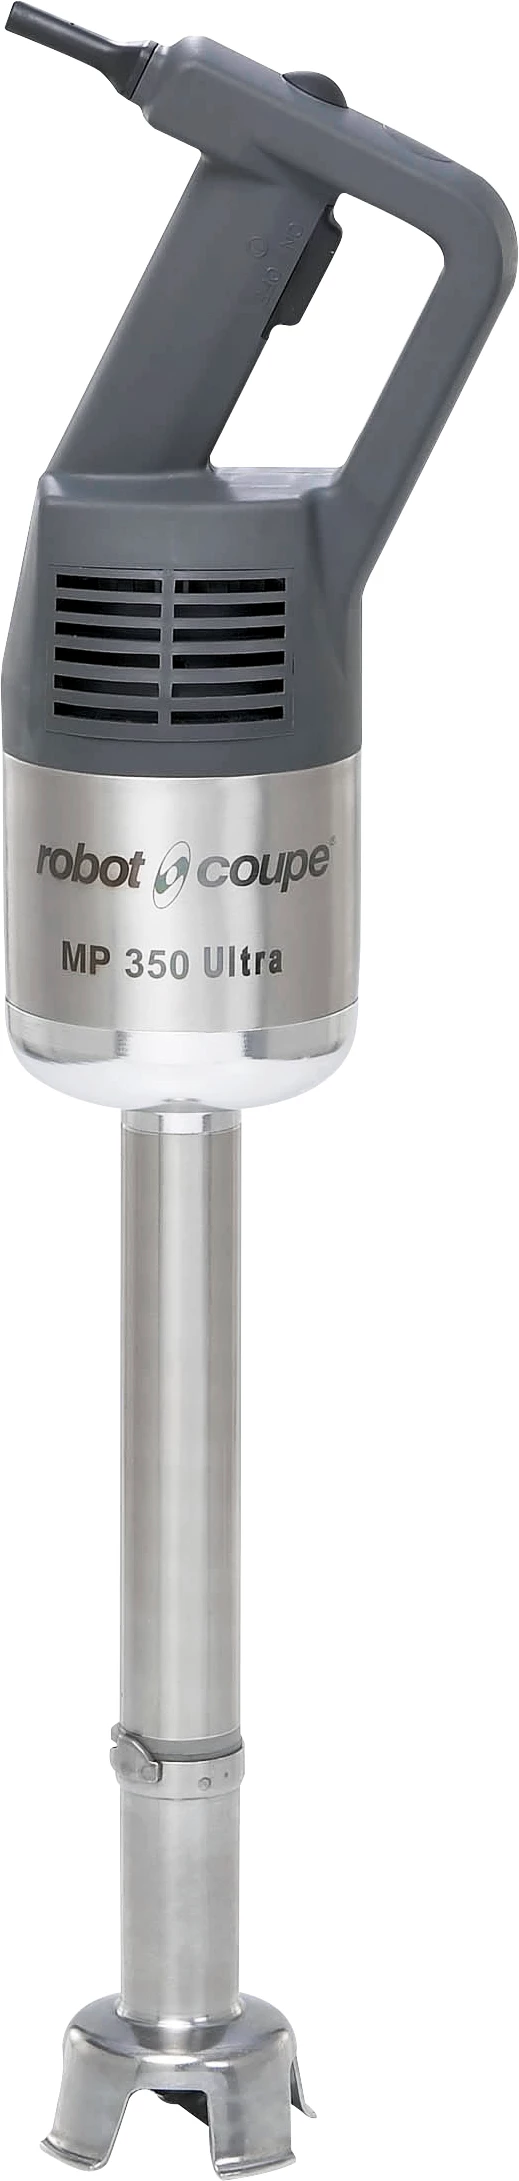 Robot Coupe MP350 Ultra stavblender